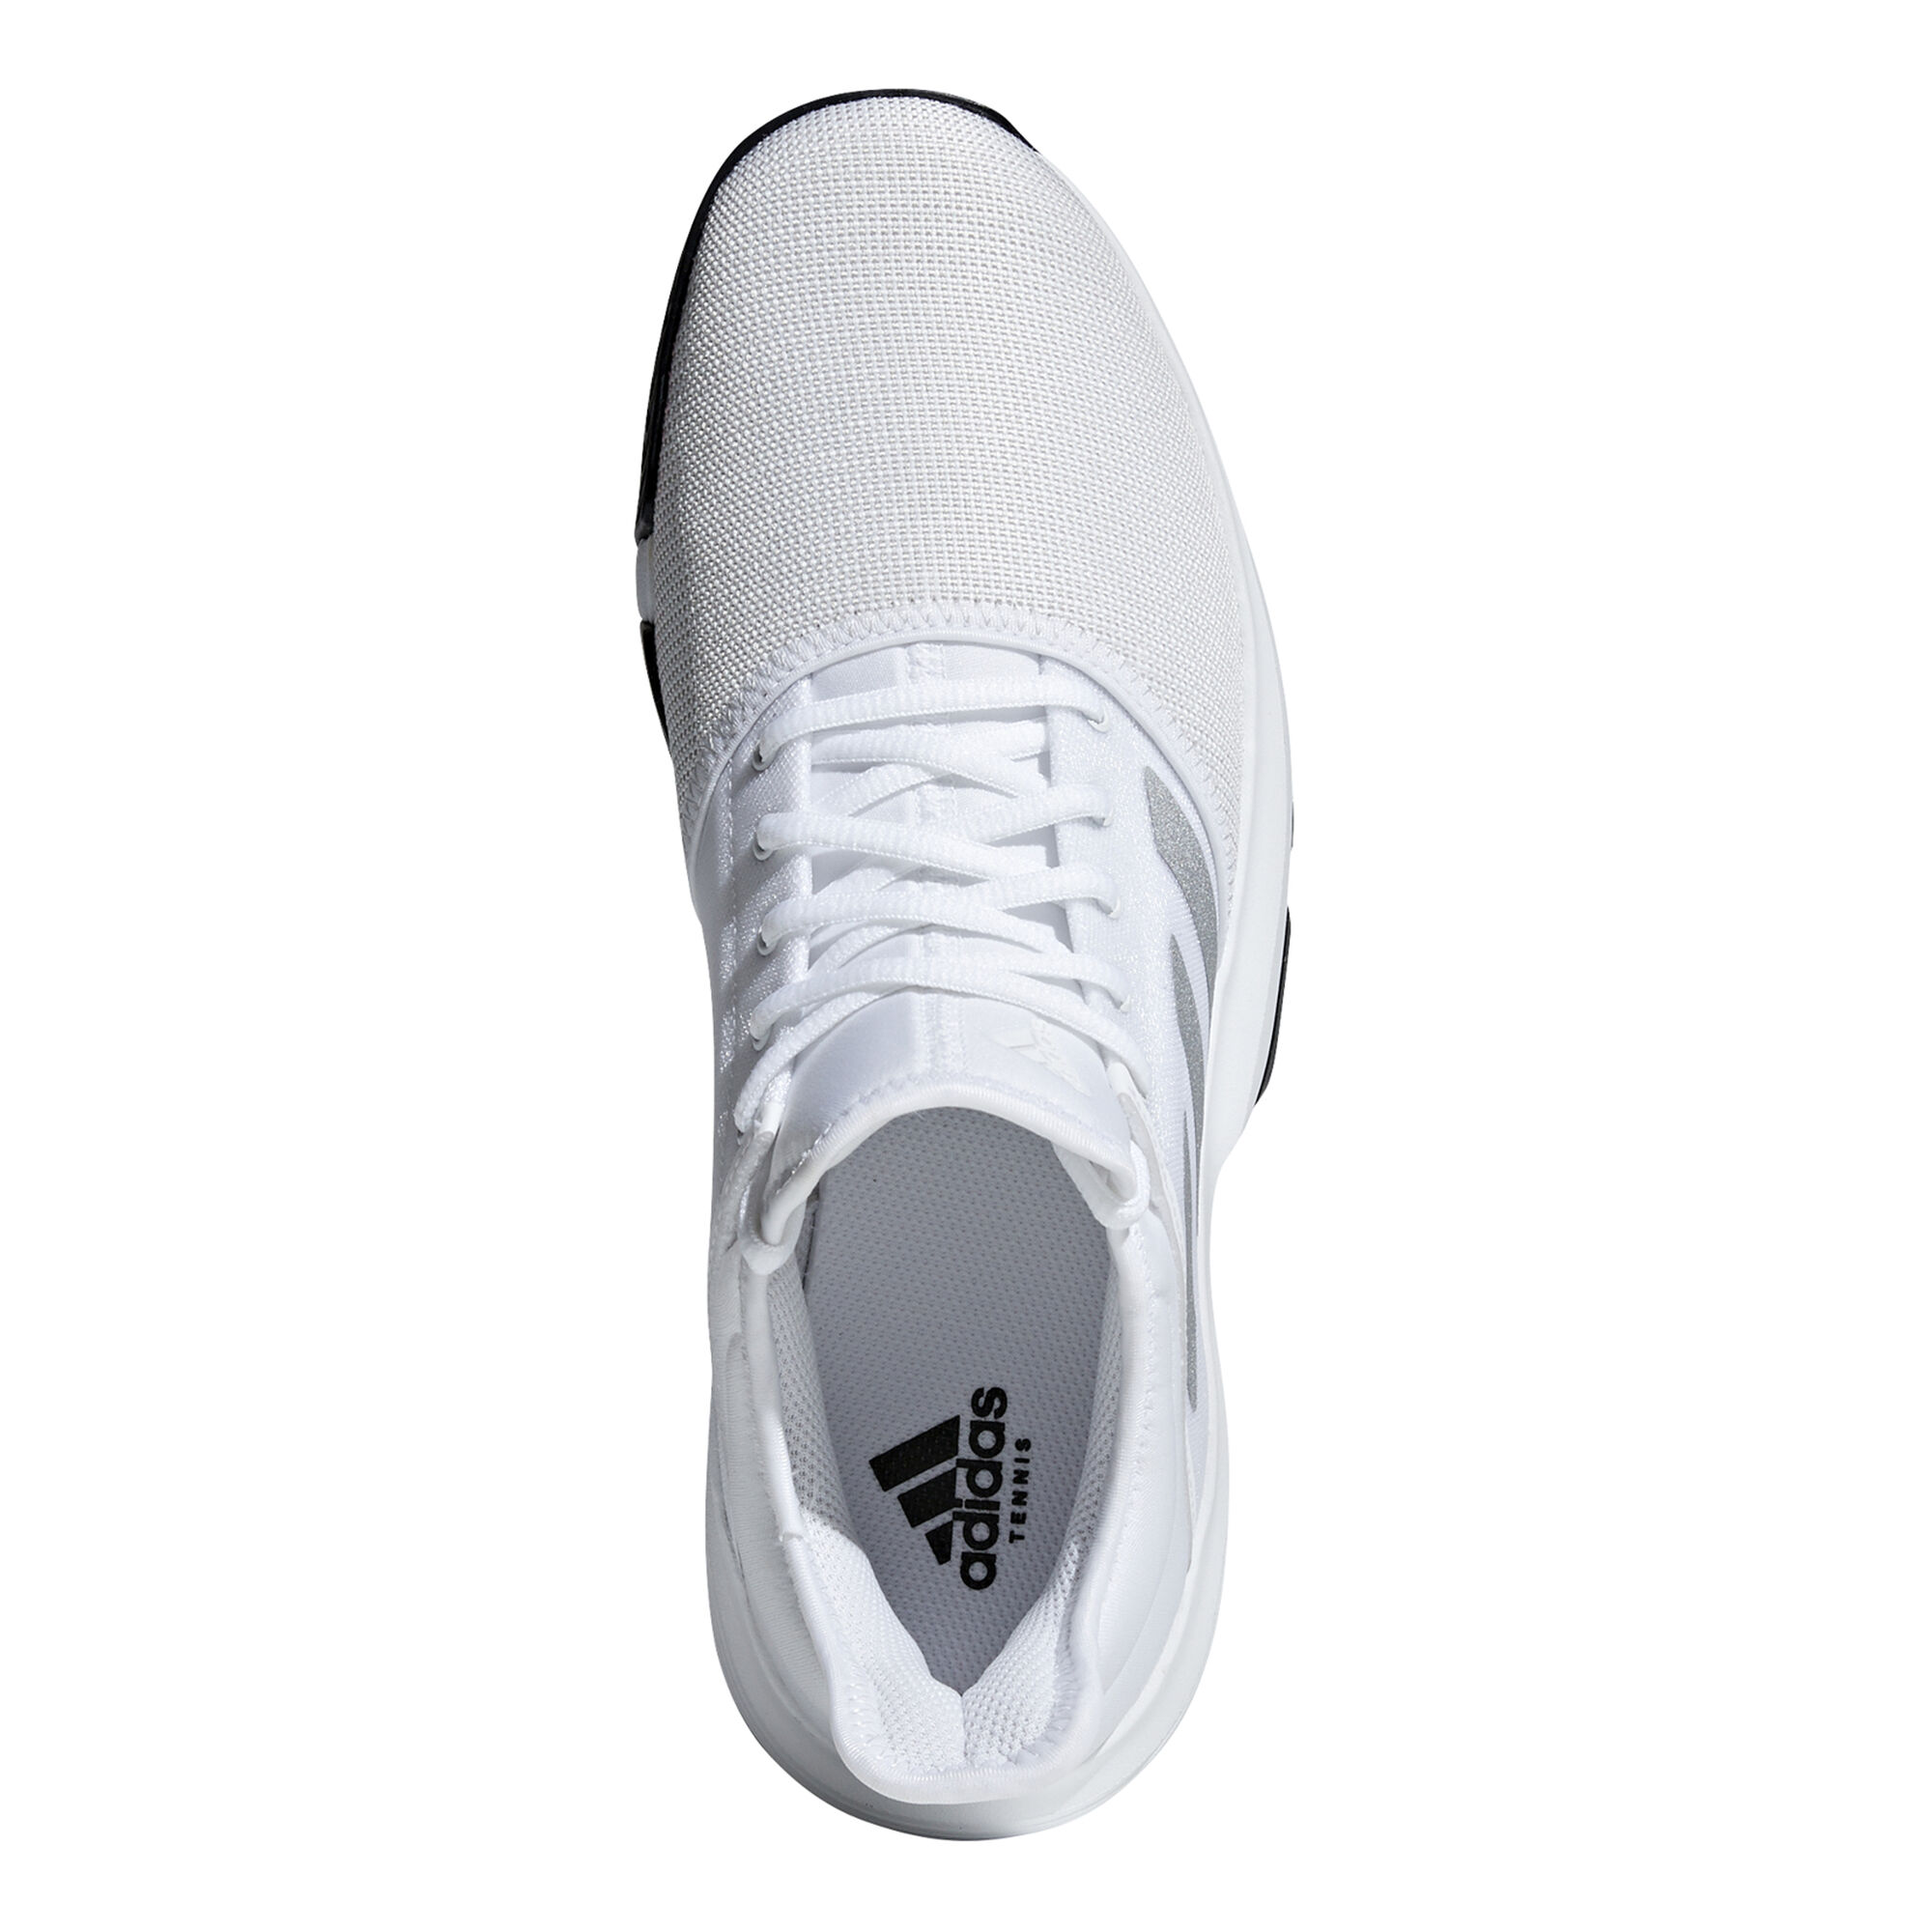 Buy adidas Game Court All Court Shoe Men White, Silver online | Tennis ...